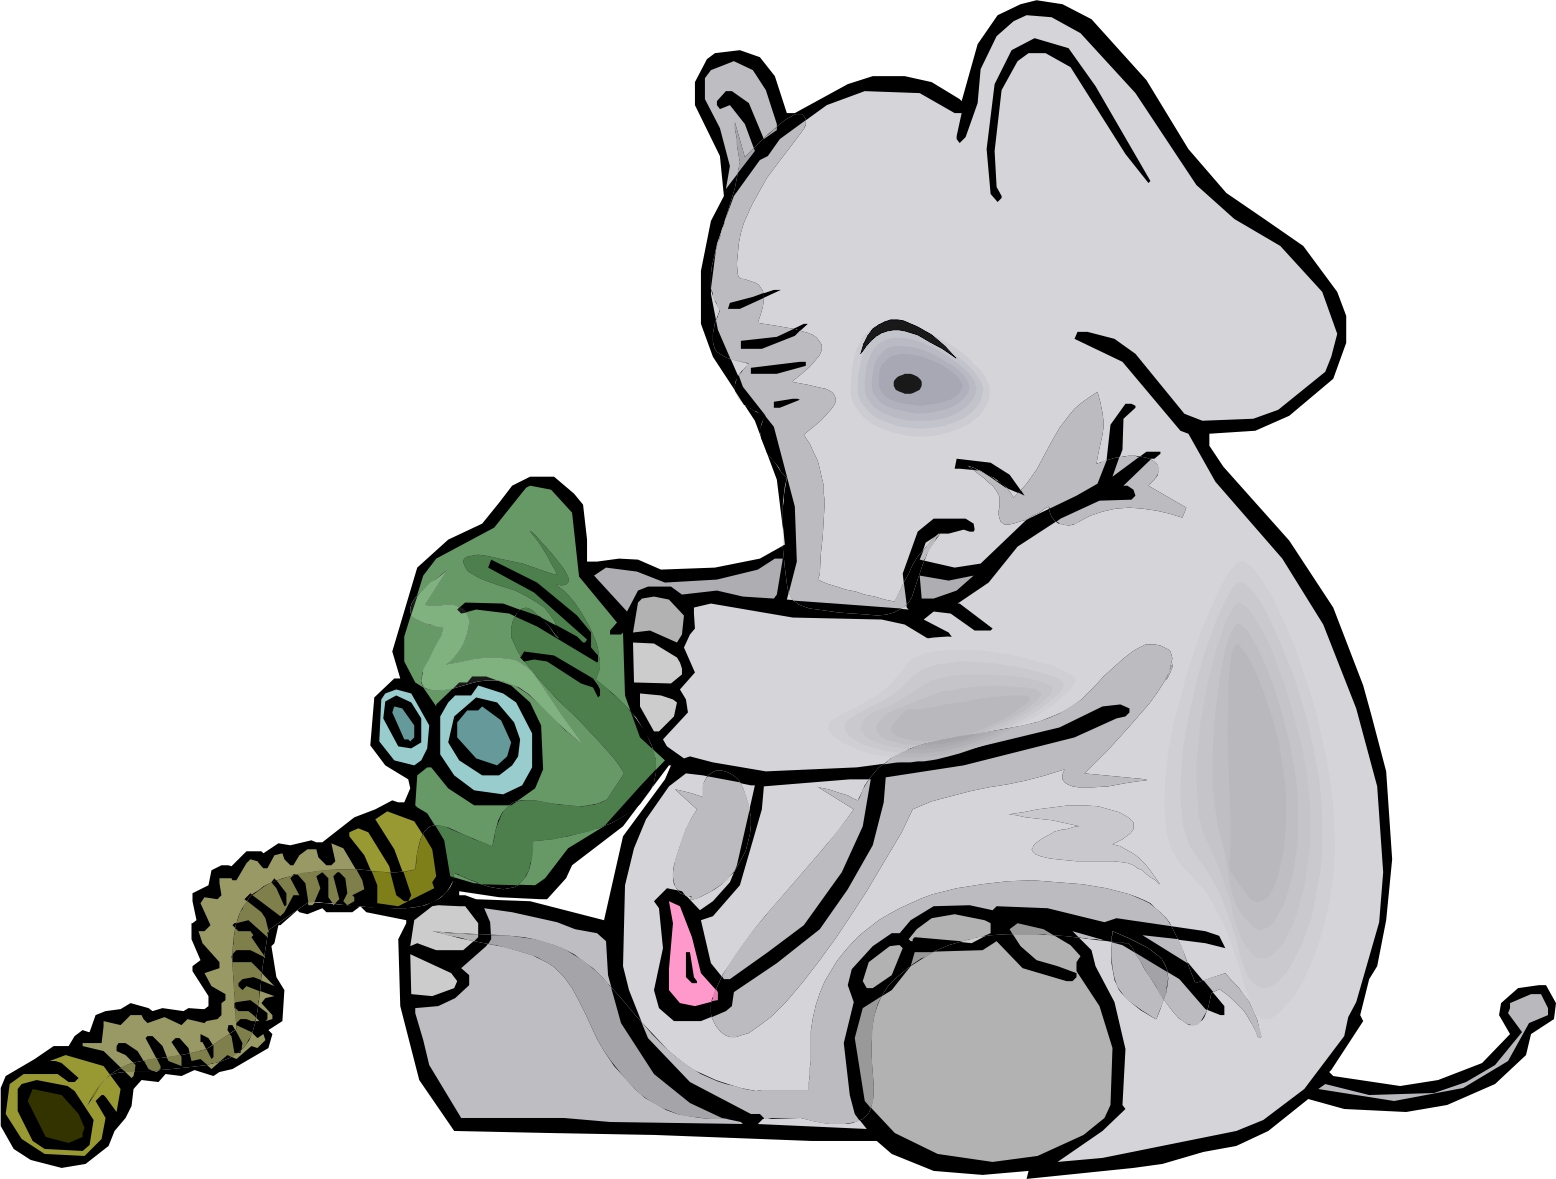 Astounding Gas Mask Cartoon Hd Wallpapers, - Elephant With Gas Mask - HD Wallpaper 